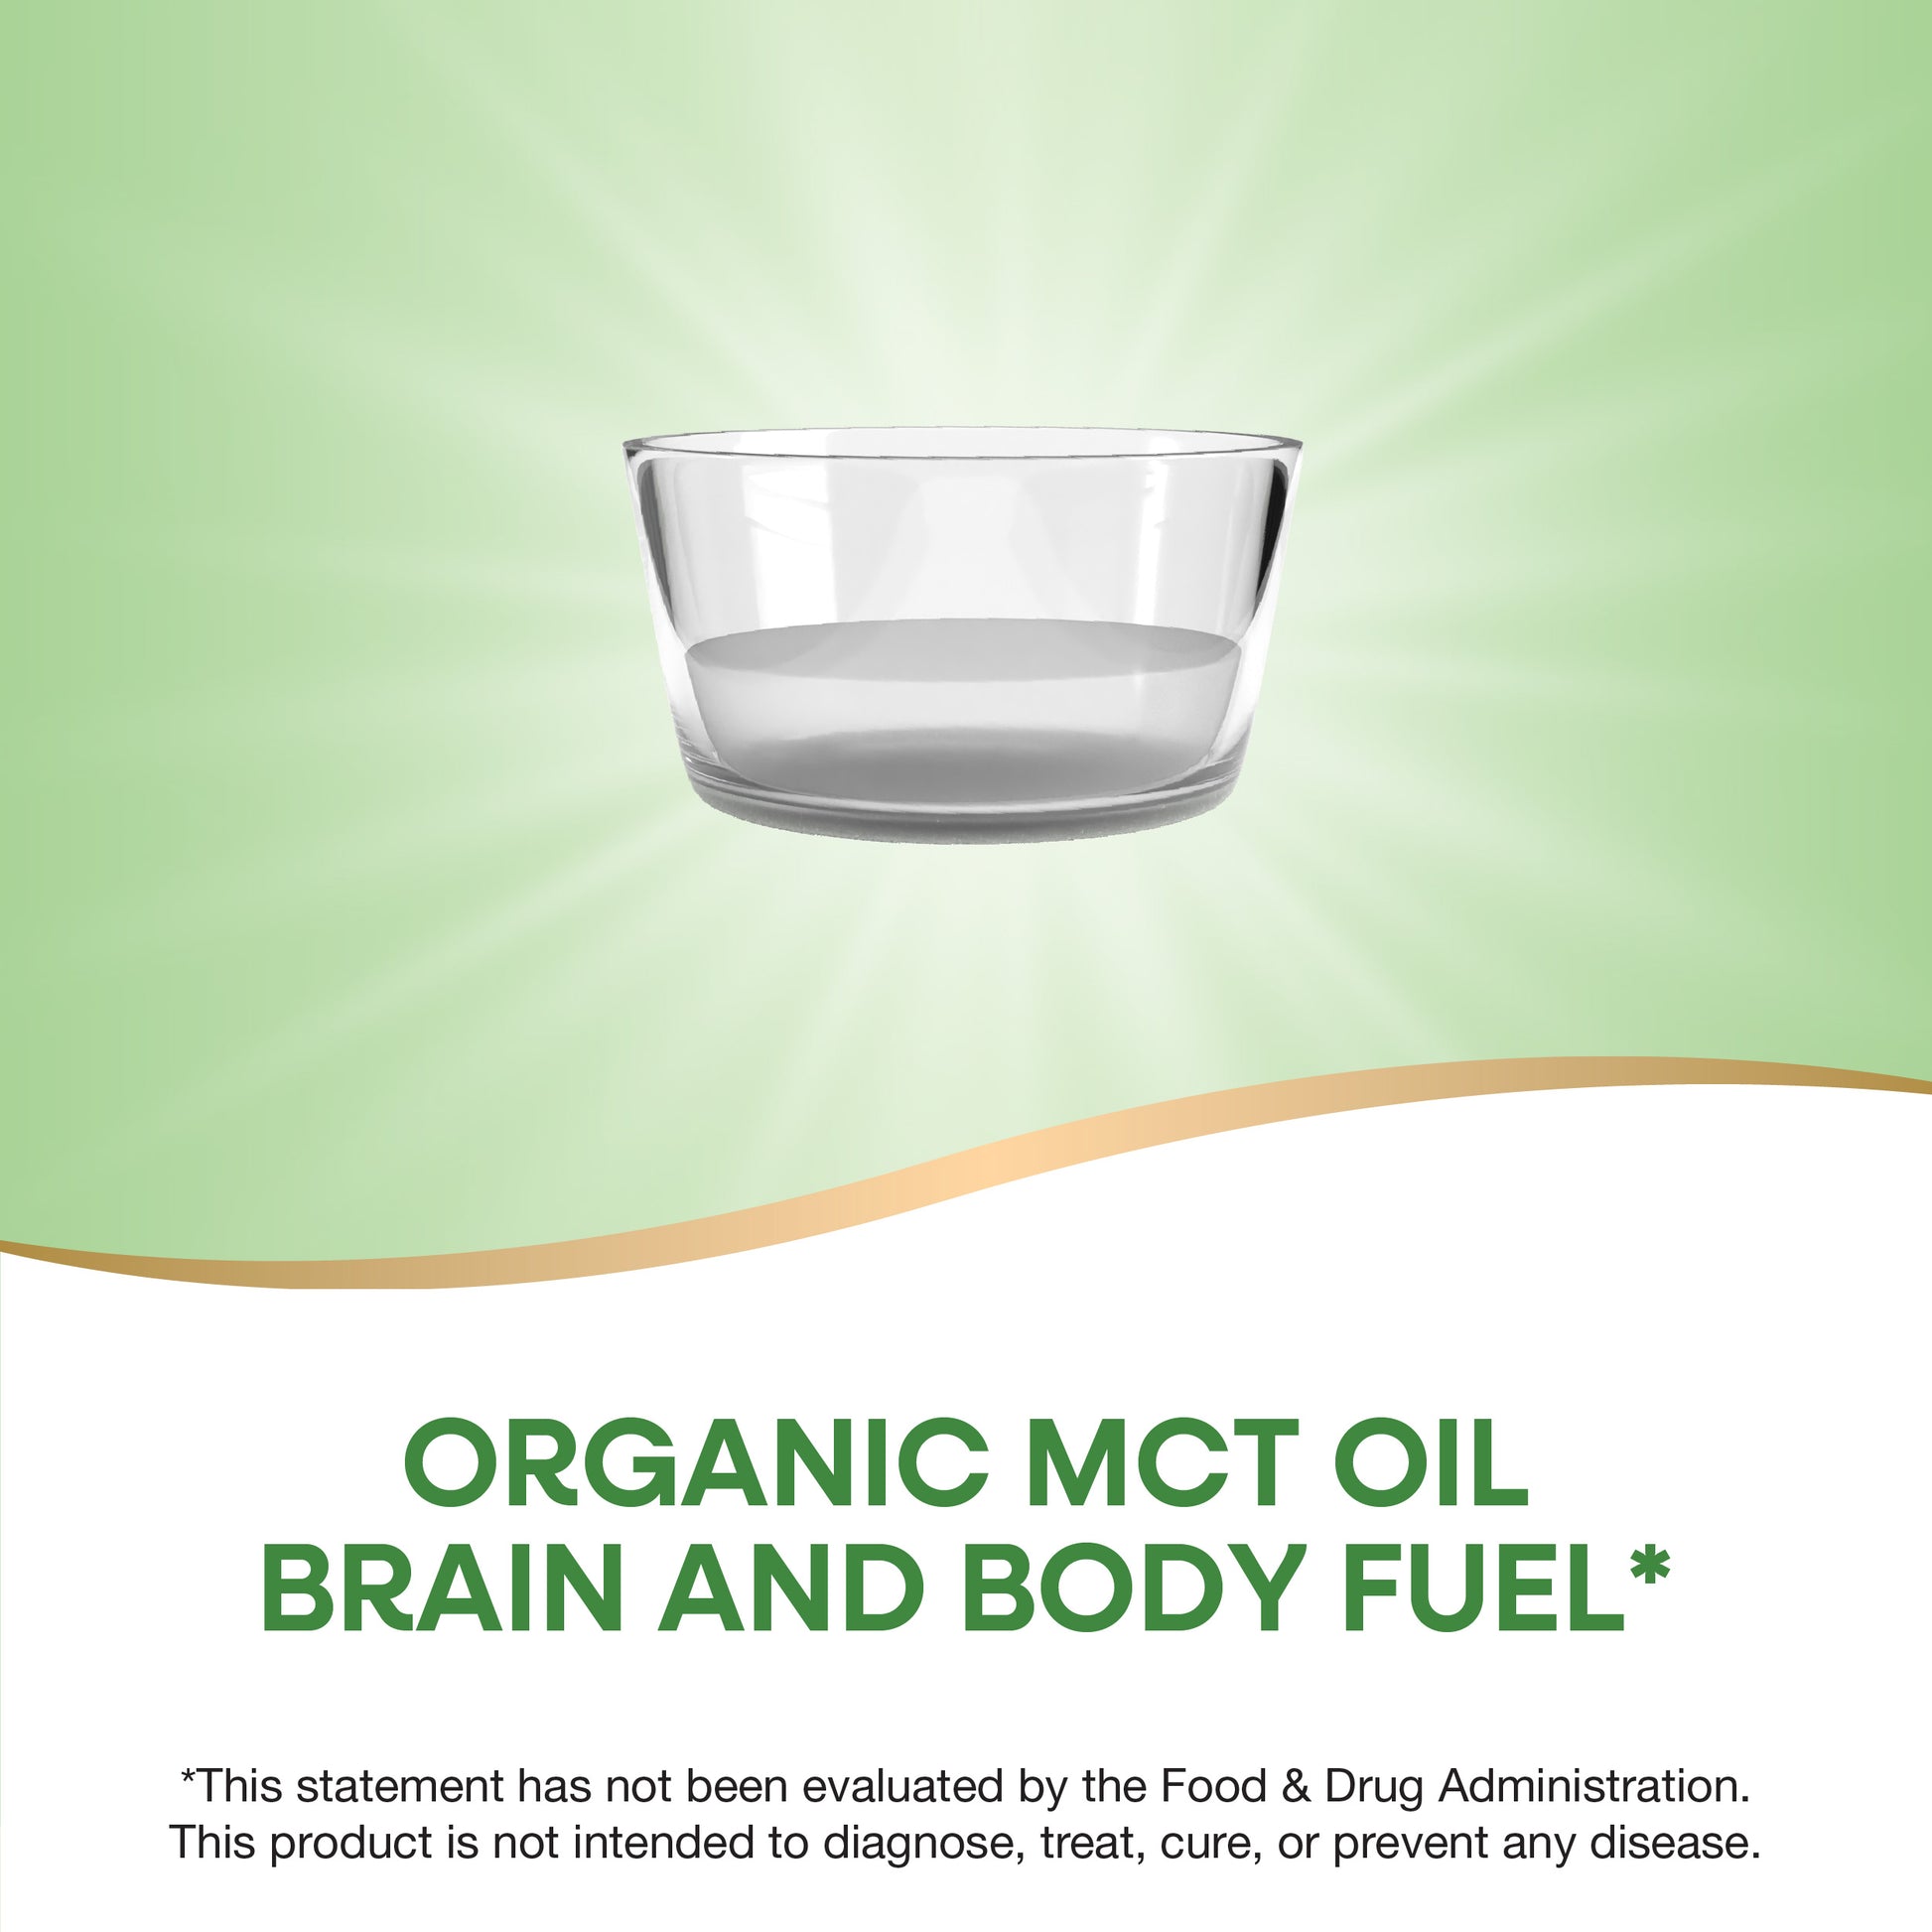 Nature's Way® | Organic MCT Oil